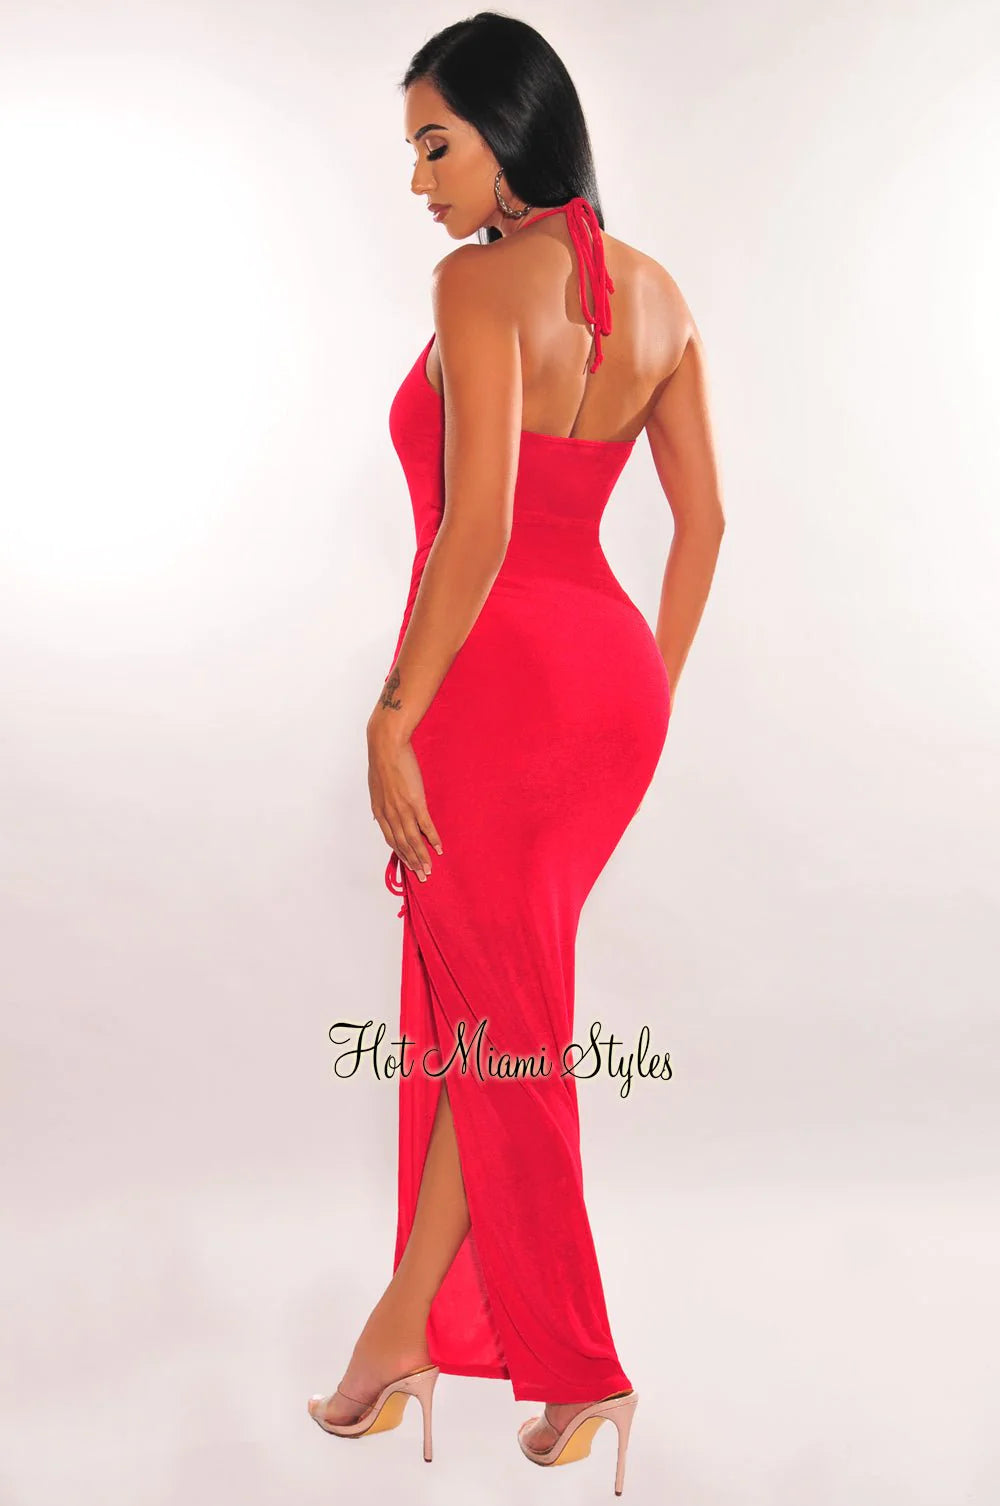 NWT Hot Miami Styles Shimmery Halter Dress (L)